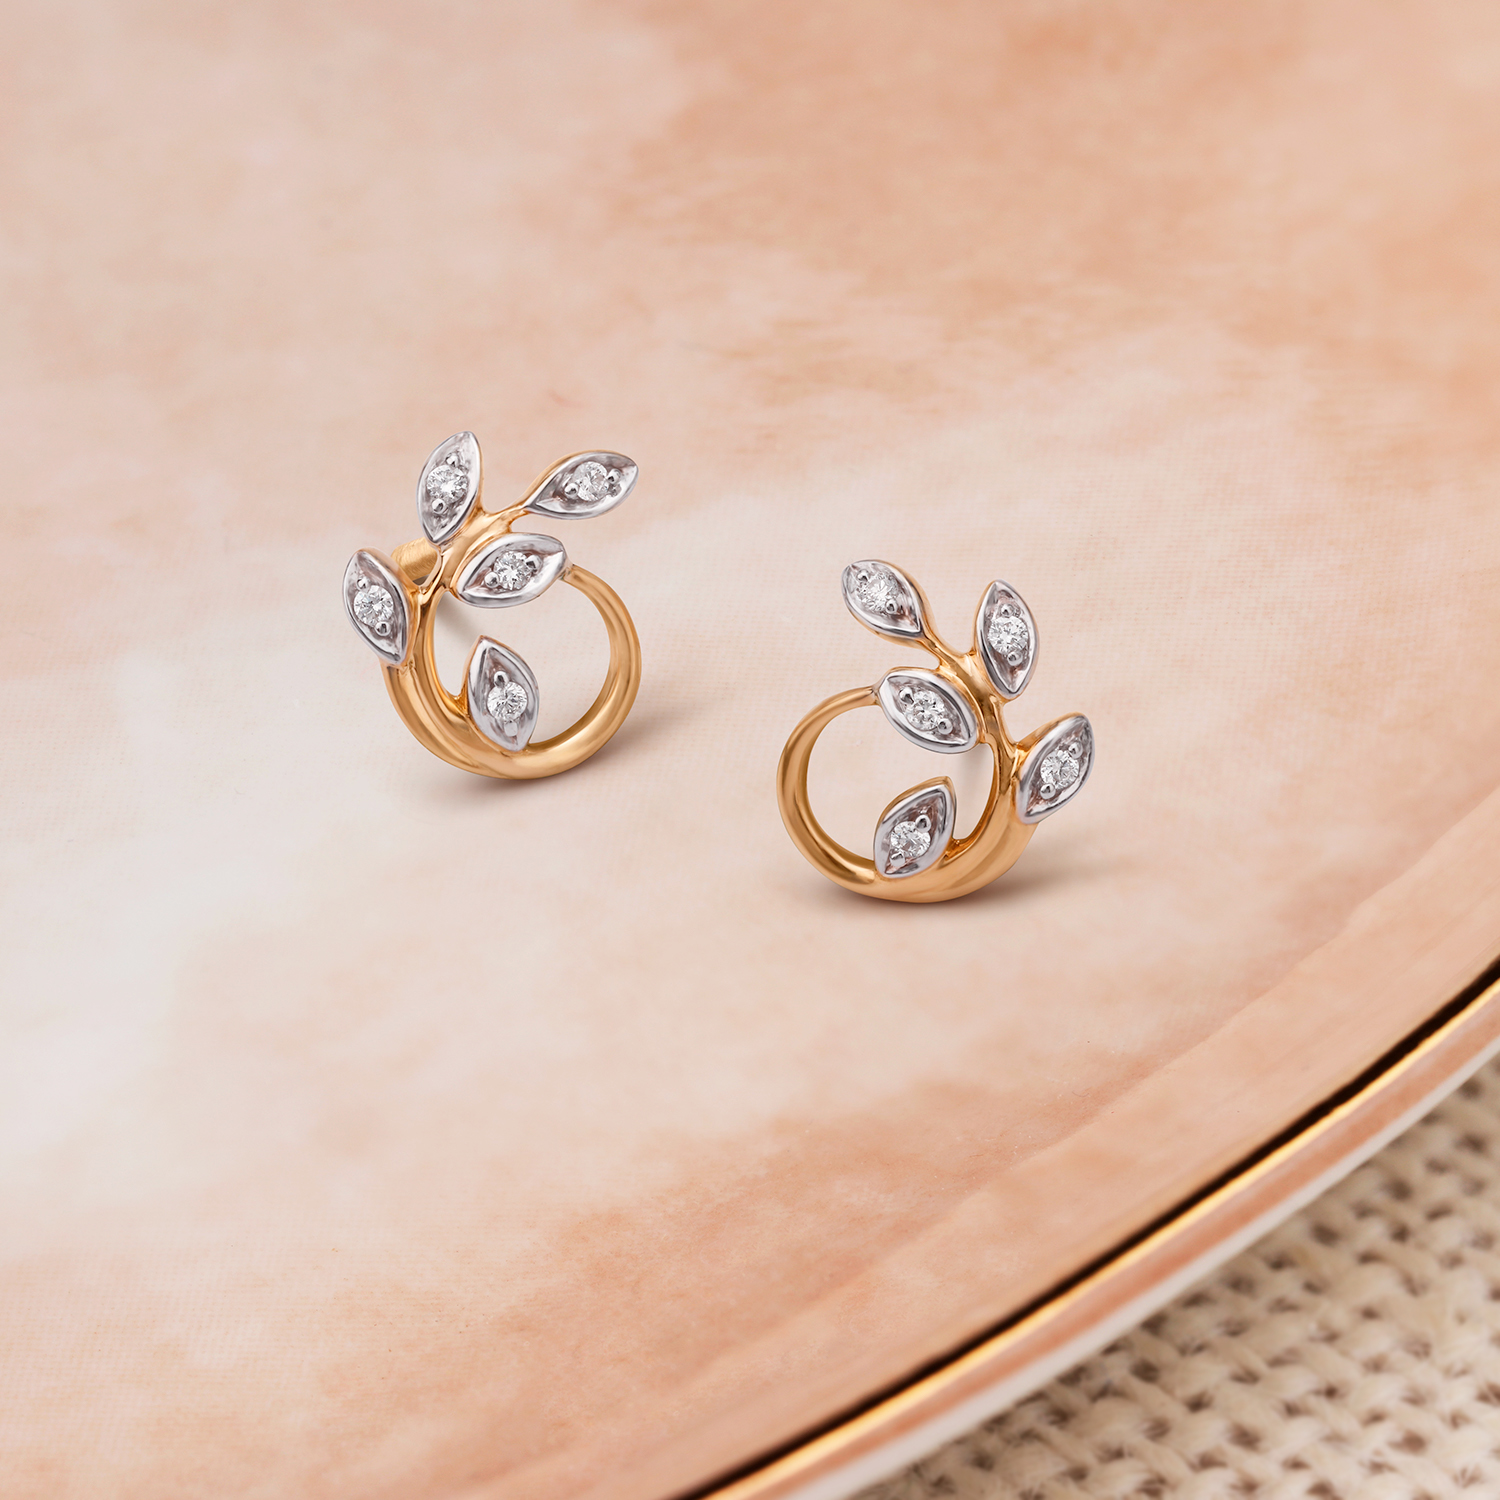 Sania in Diamond Bridal Jewelry - Jewellery Designs